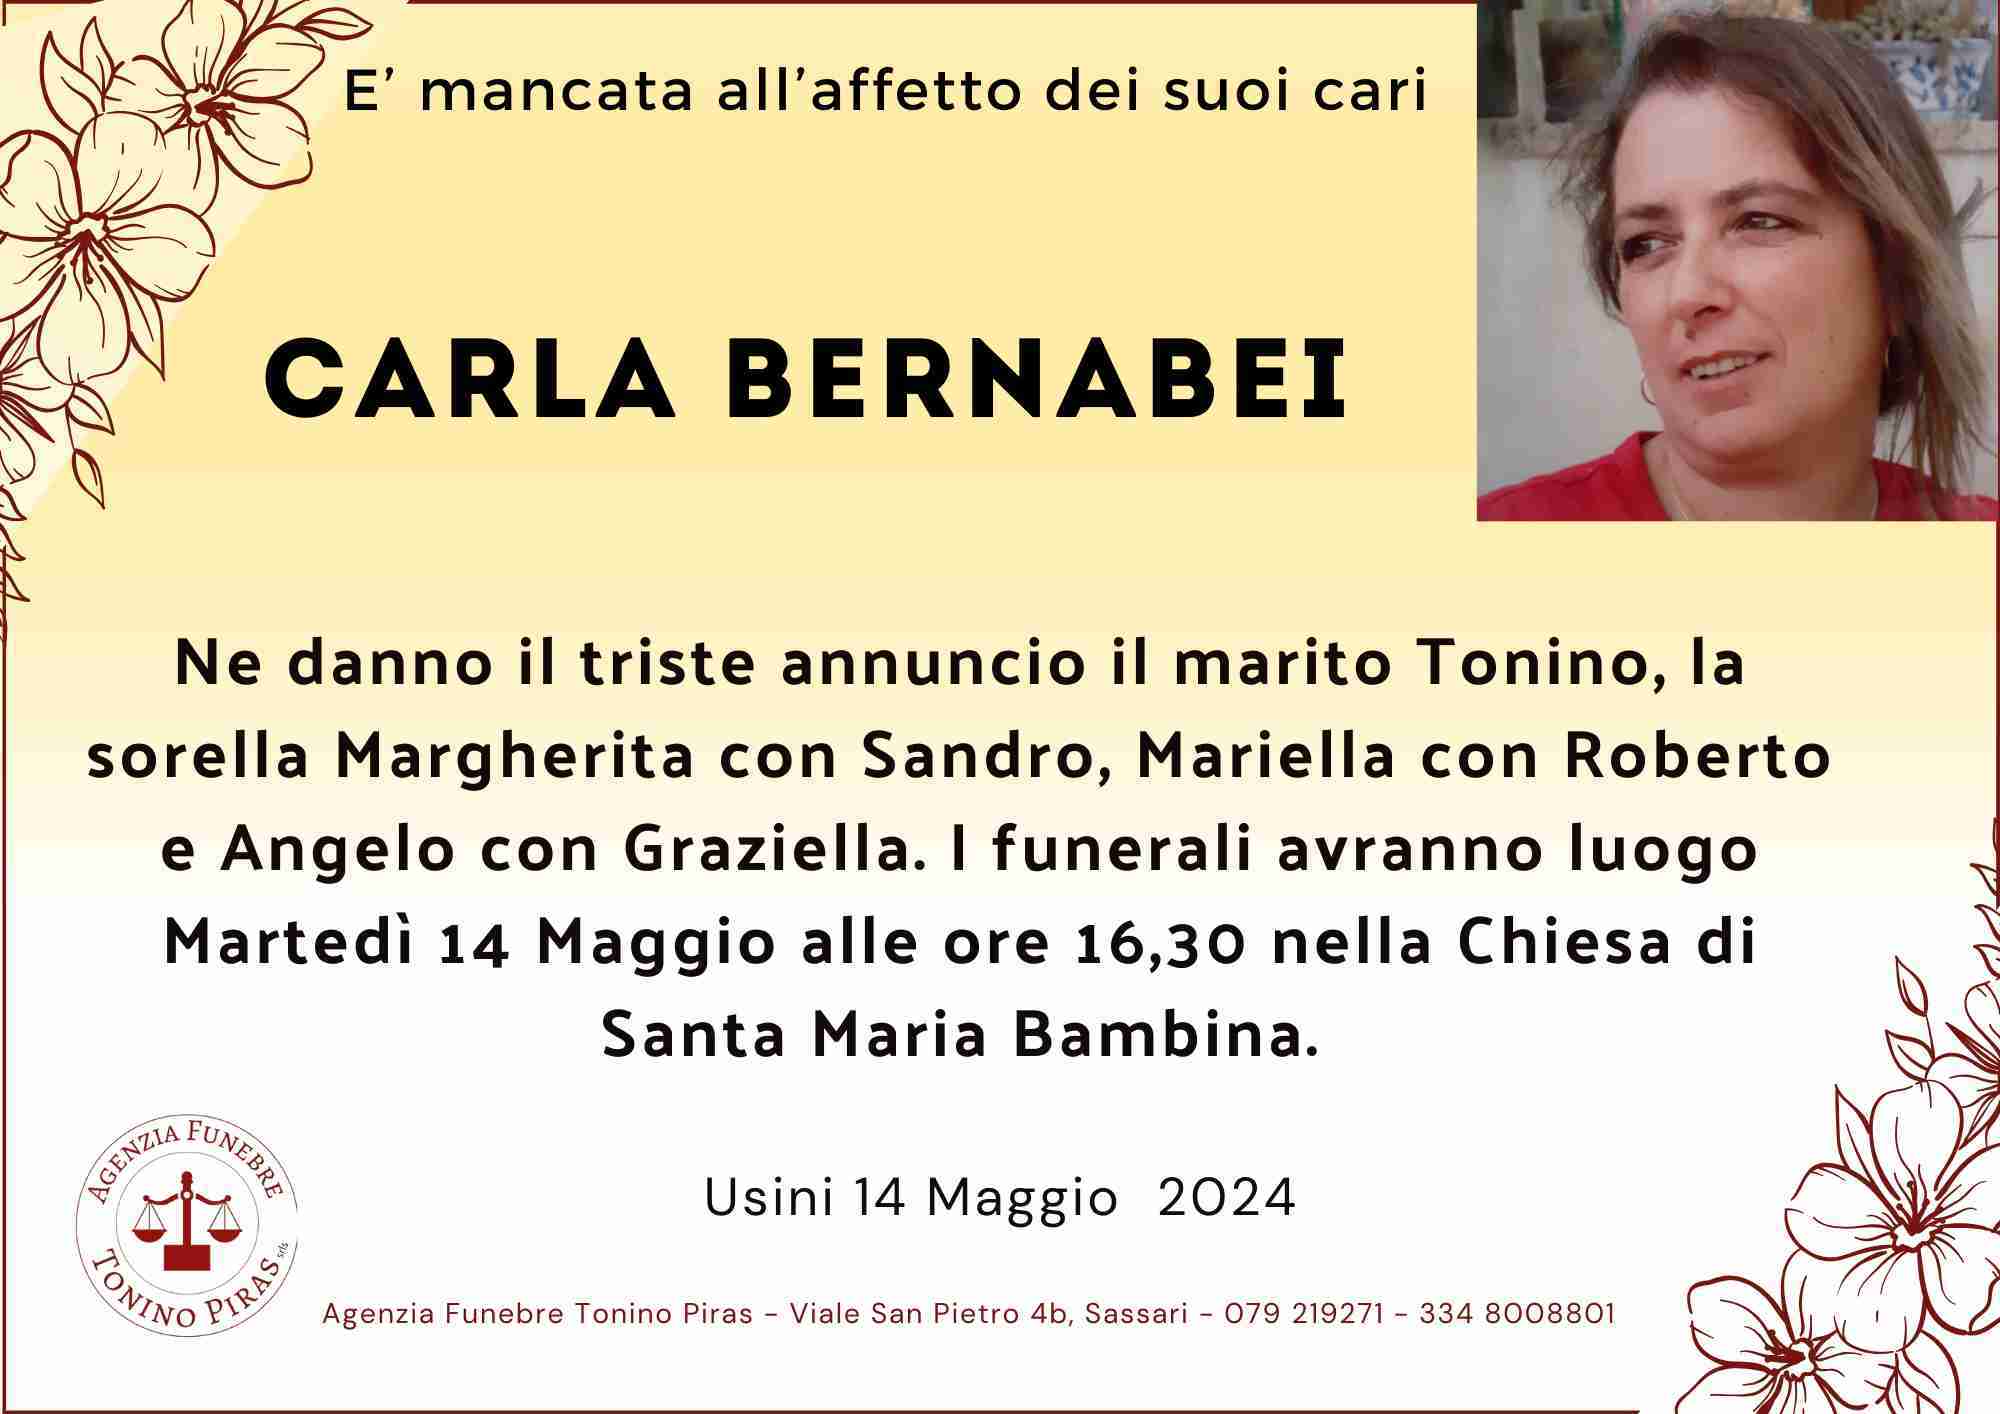 Carla Bernabei